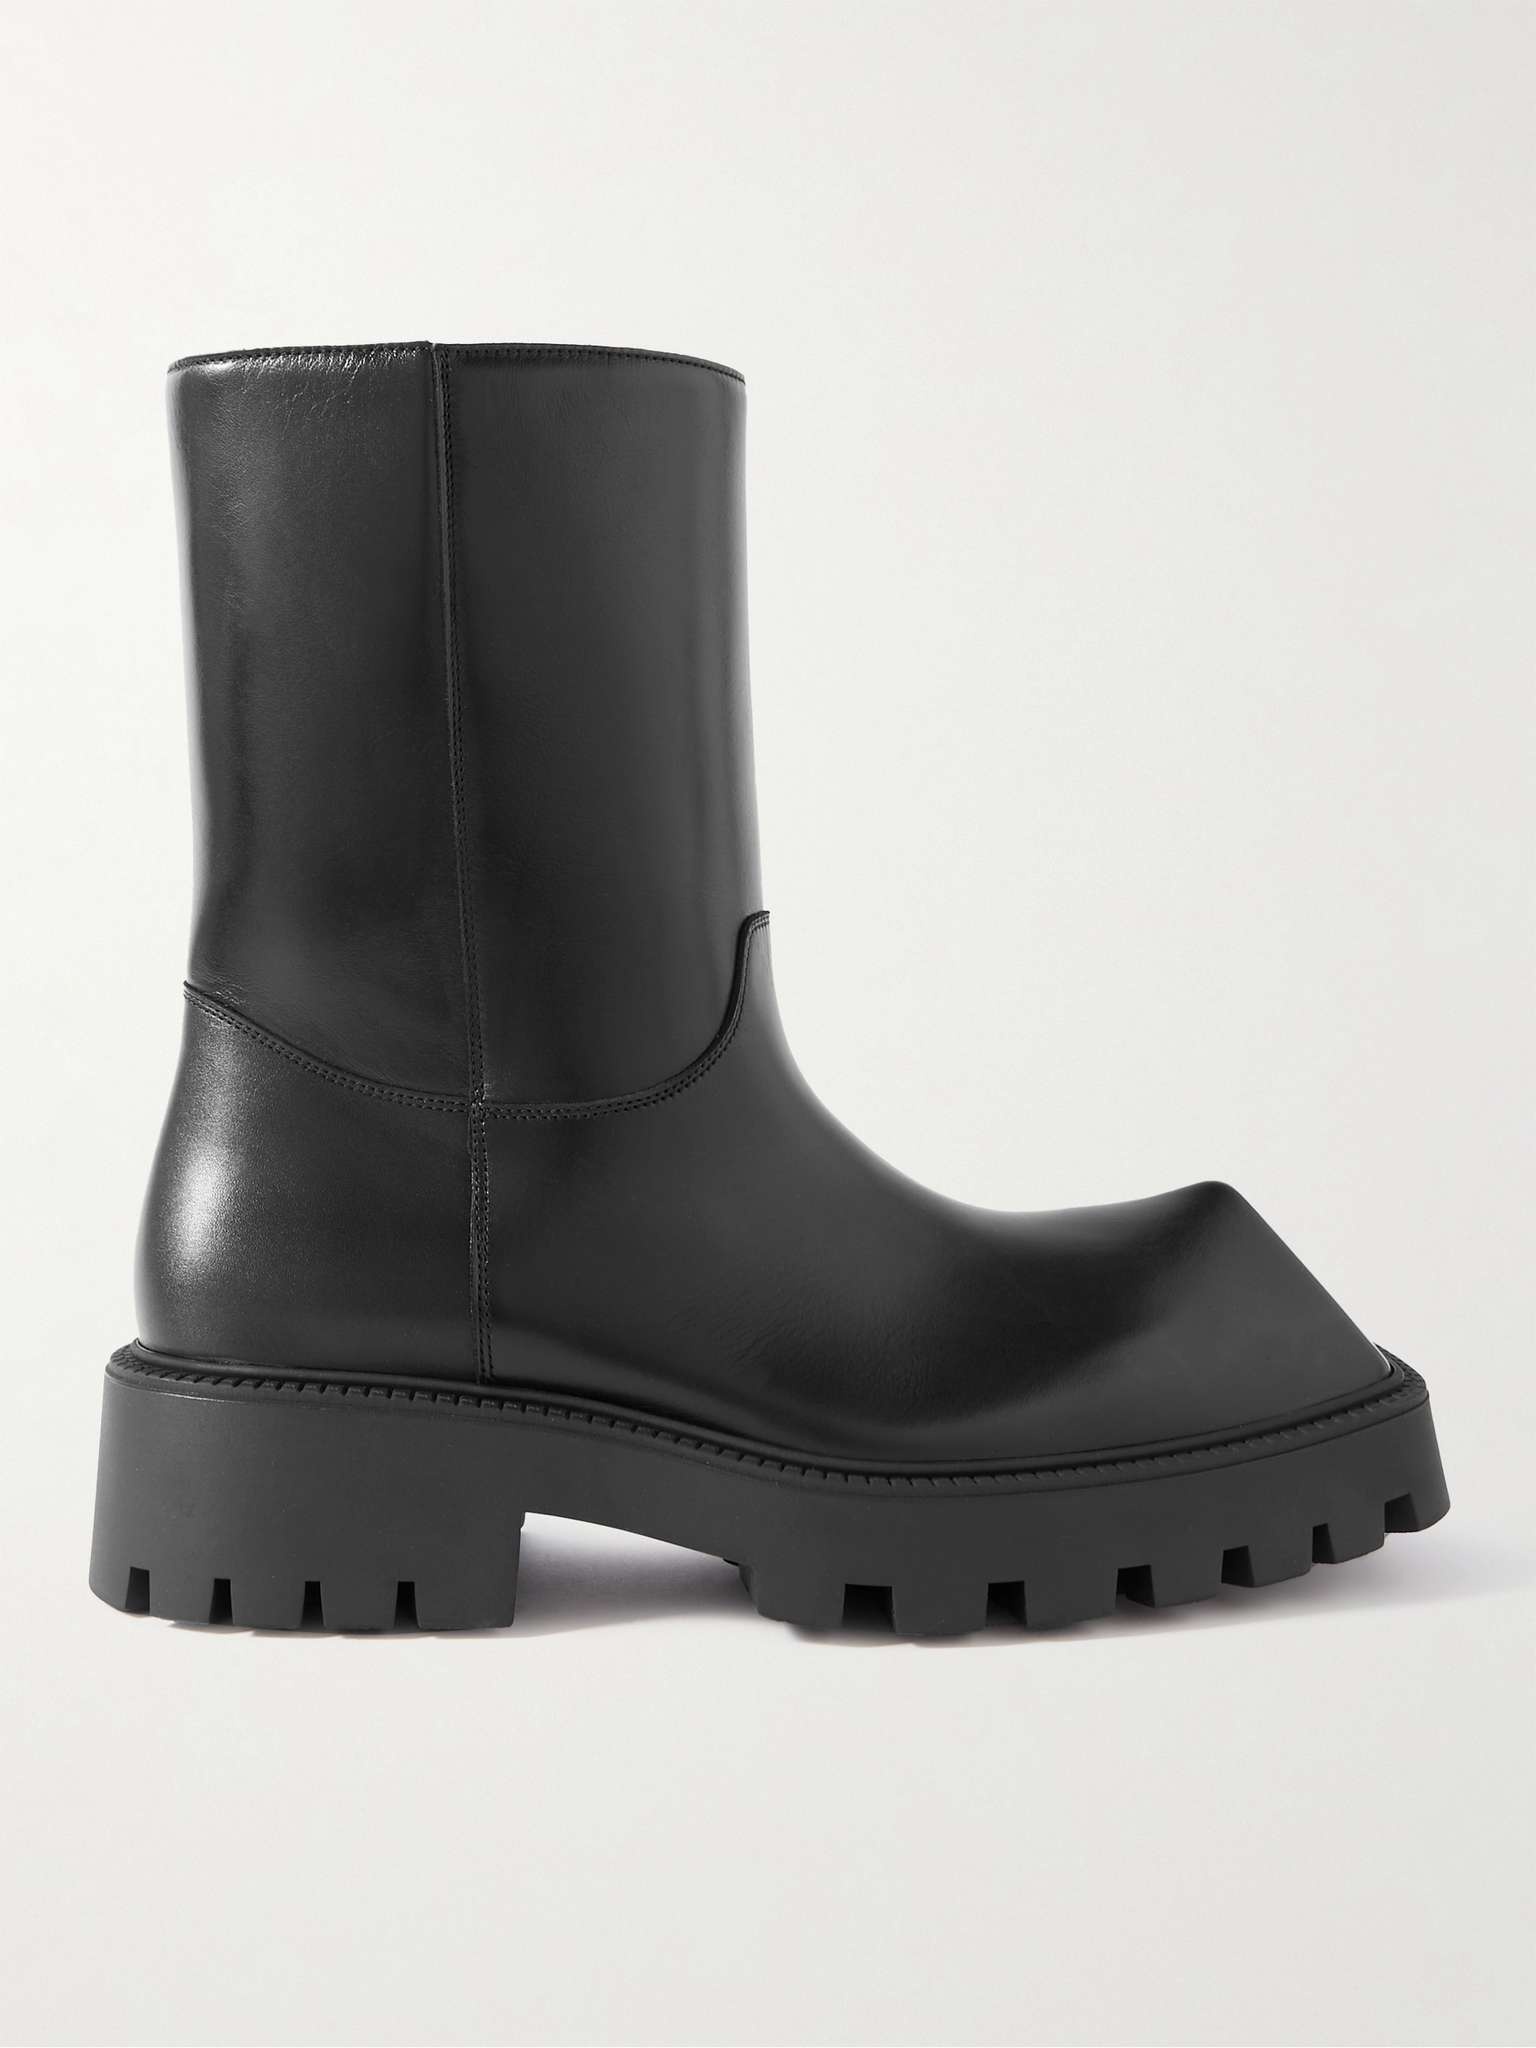 Rhino Leather Boots - 1